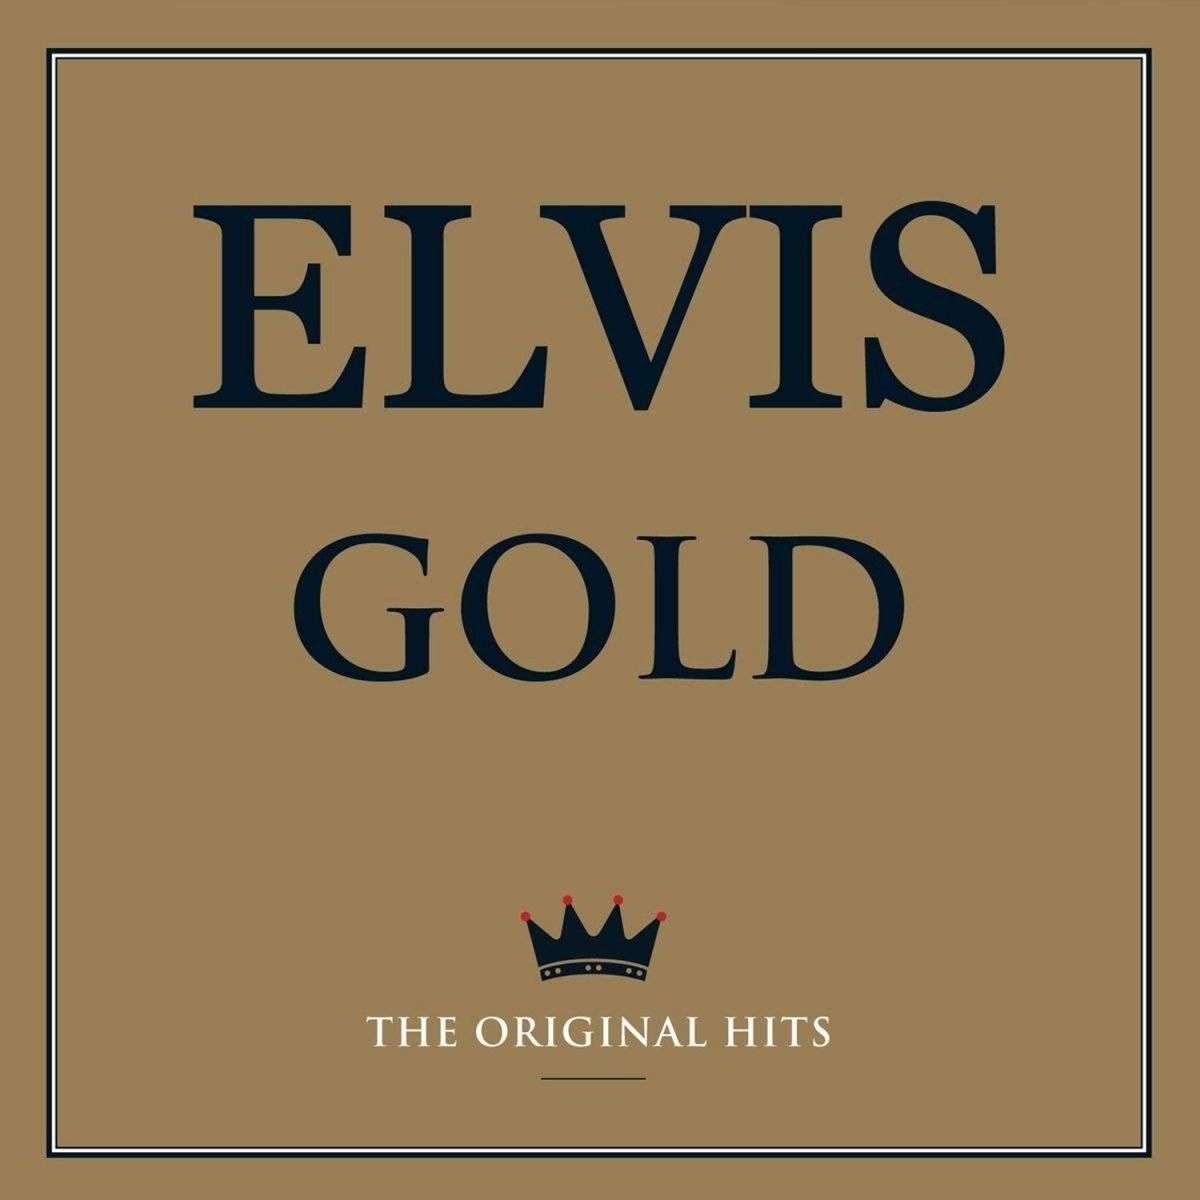 Vinyl English Elvis Presley Gold The Original Hits Lp